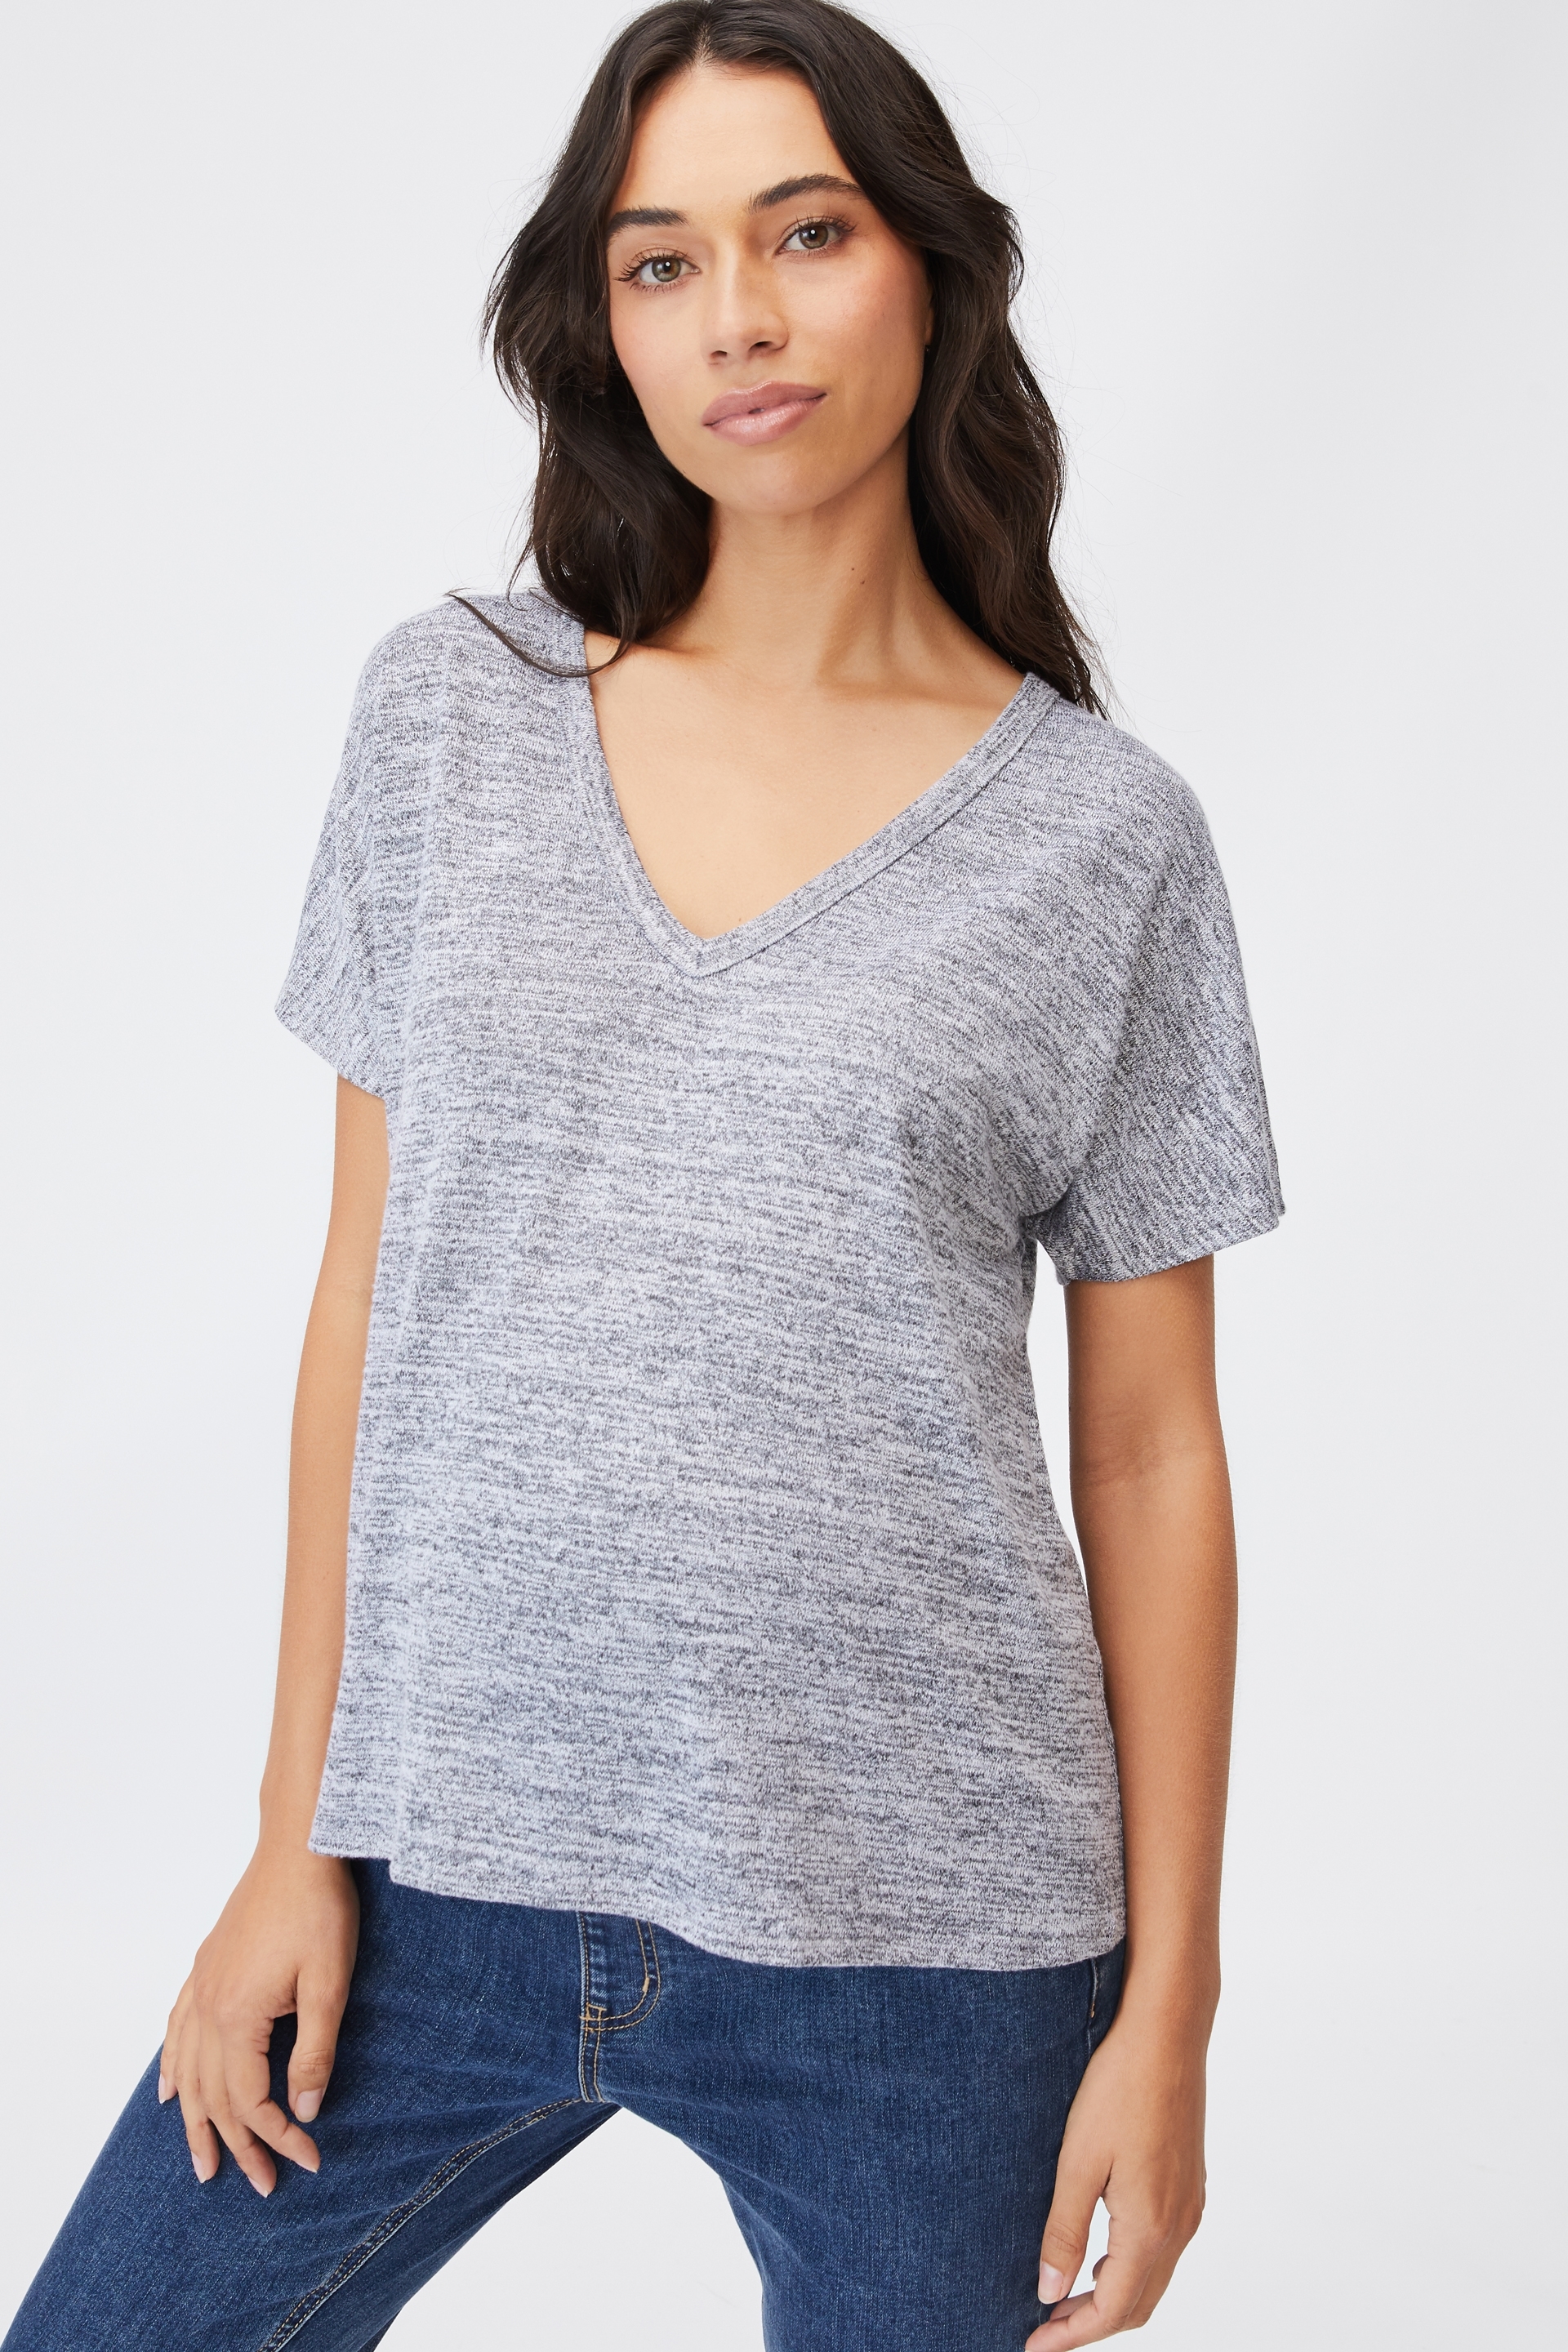 Cotton On Women - Maternity Karly Short Sleeve Top - Grey twist